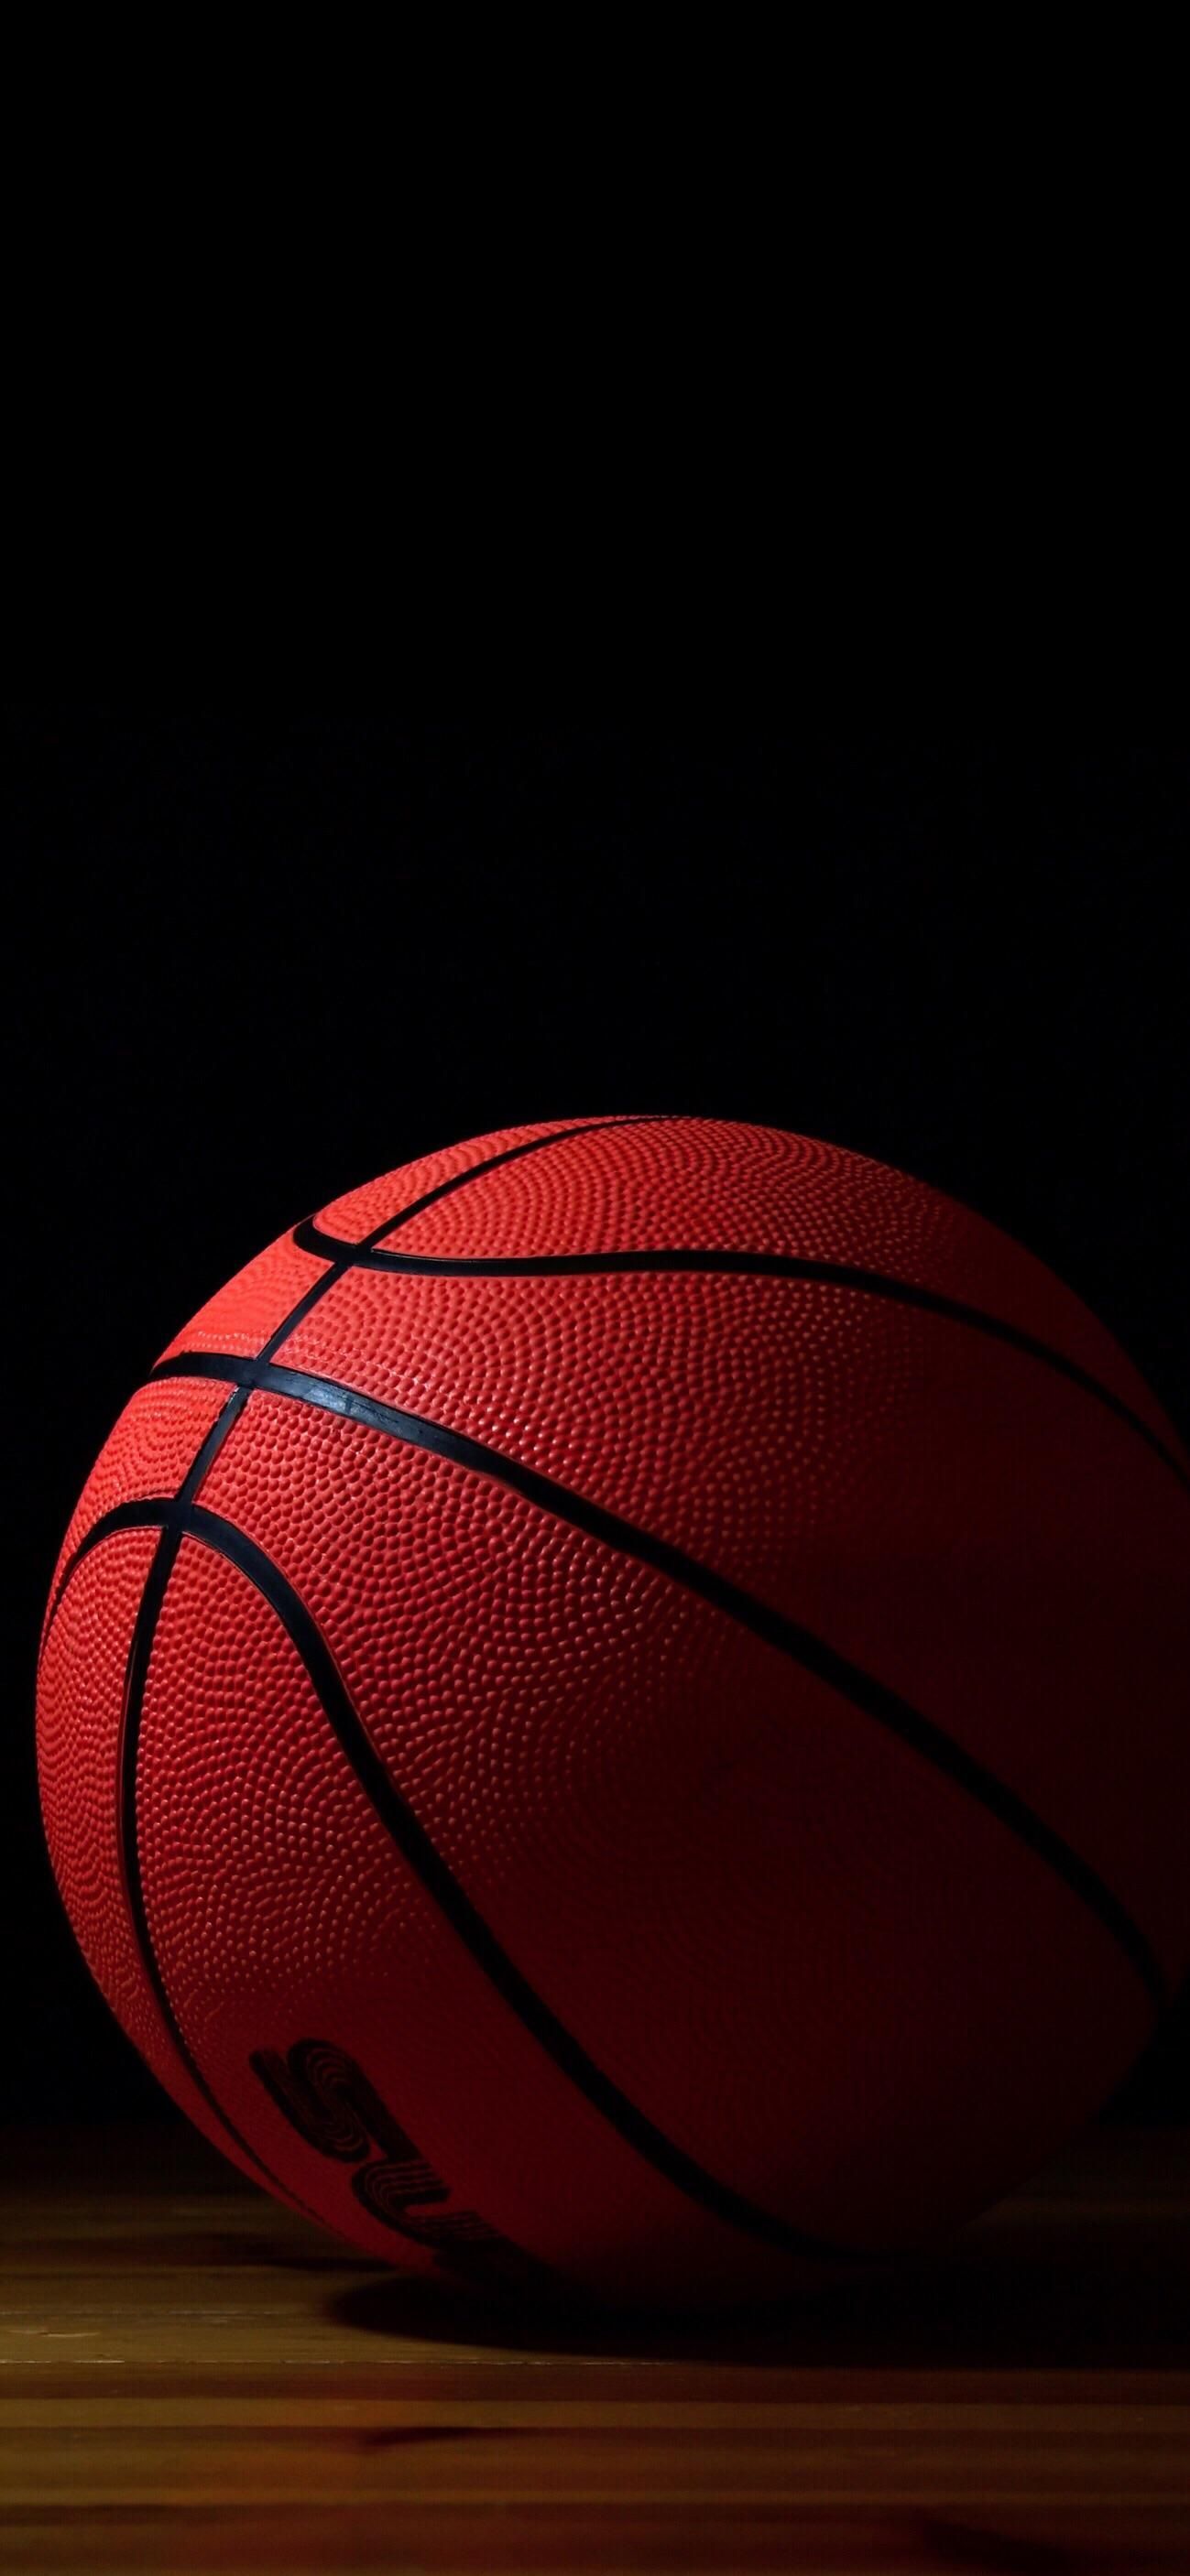 iPhone Ultra HD Sports Wallpaper. Basketball iphone wallpaper, Basketball wallpaper, iPhone wallpaper